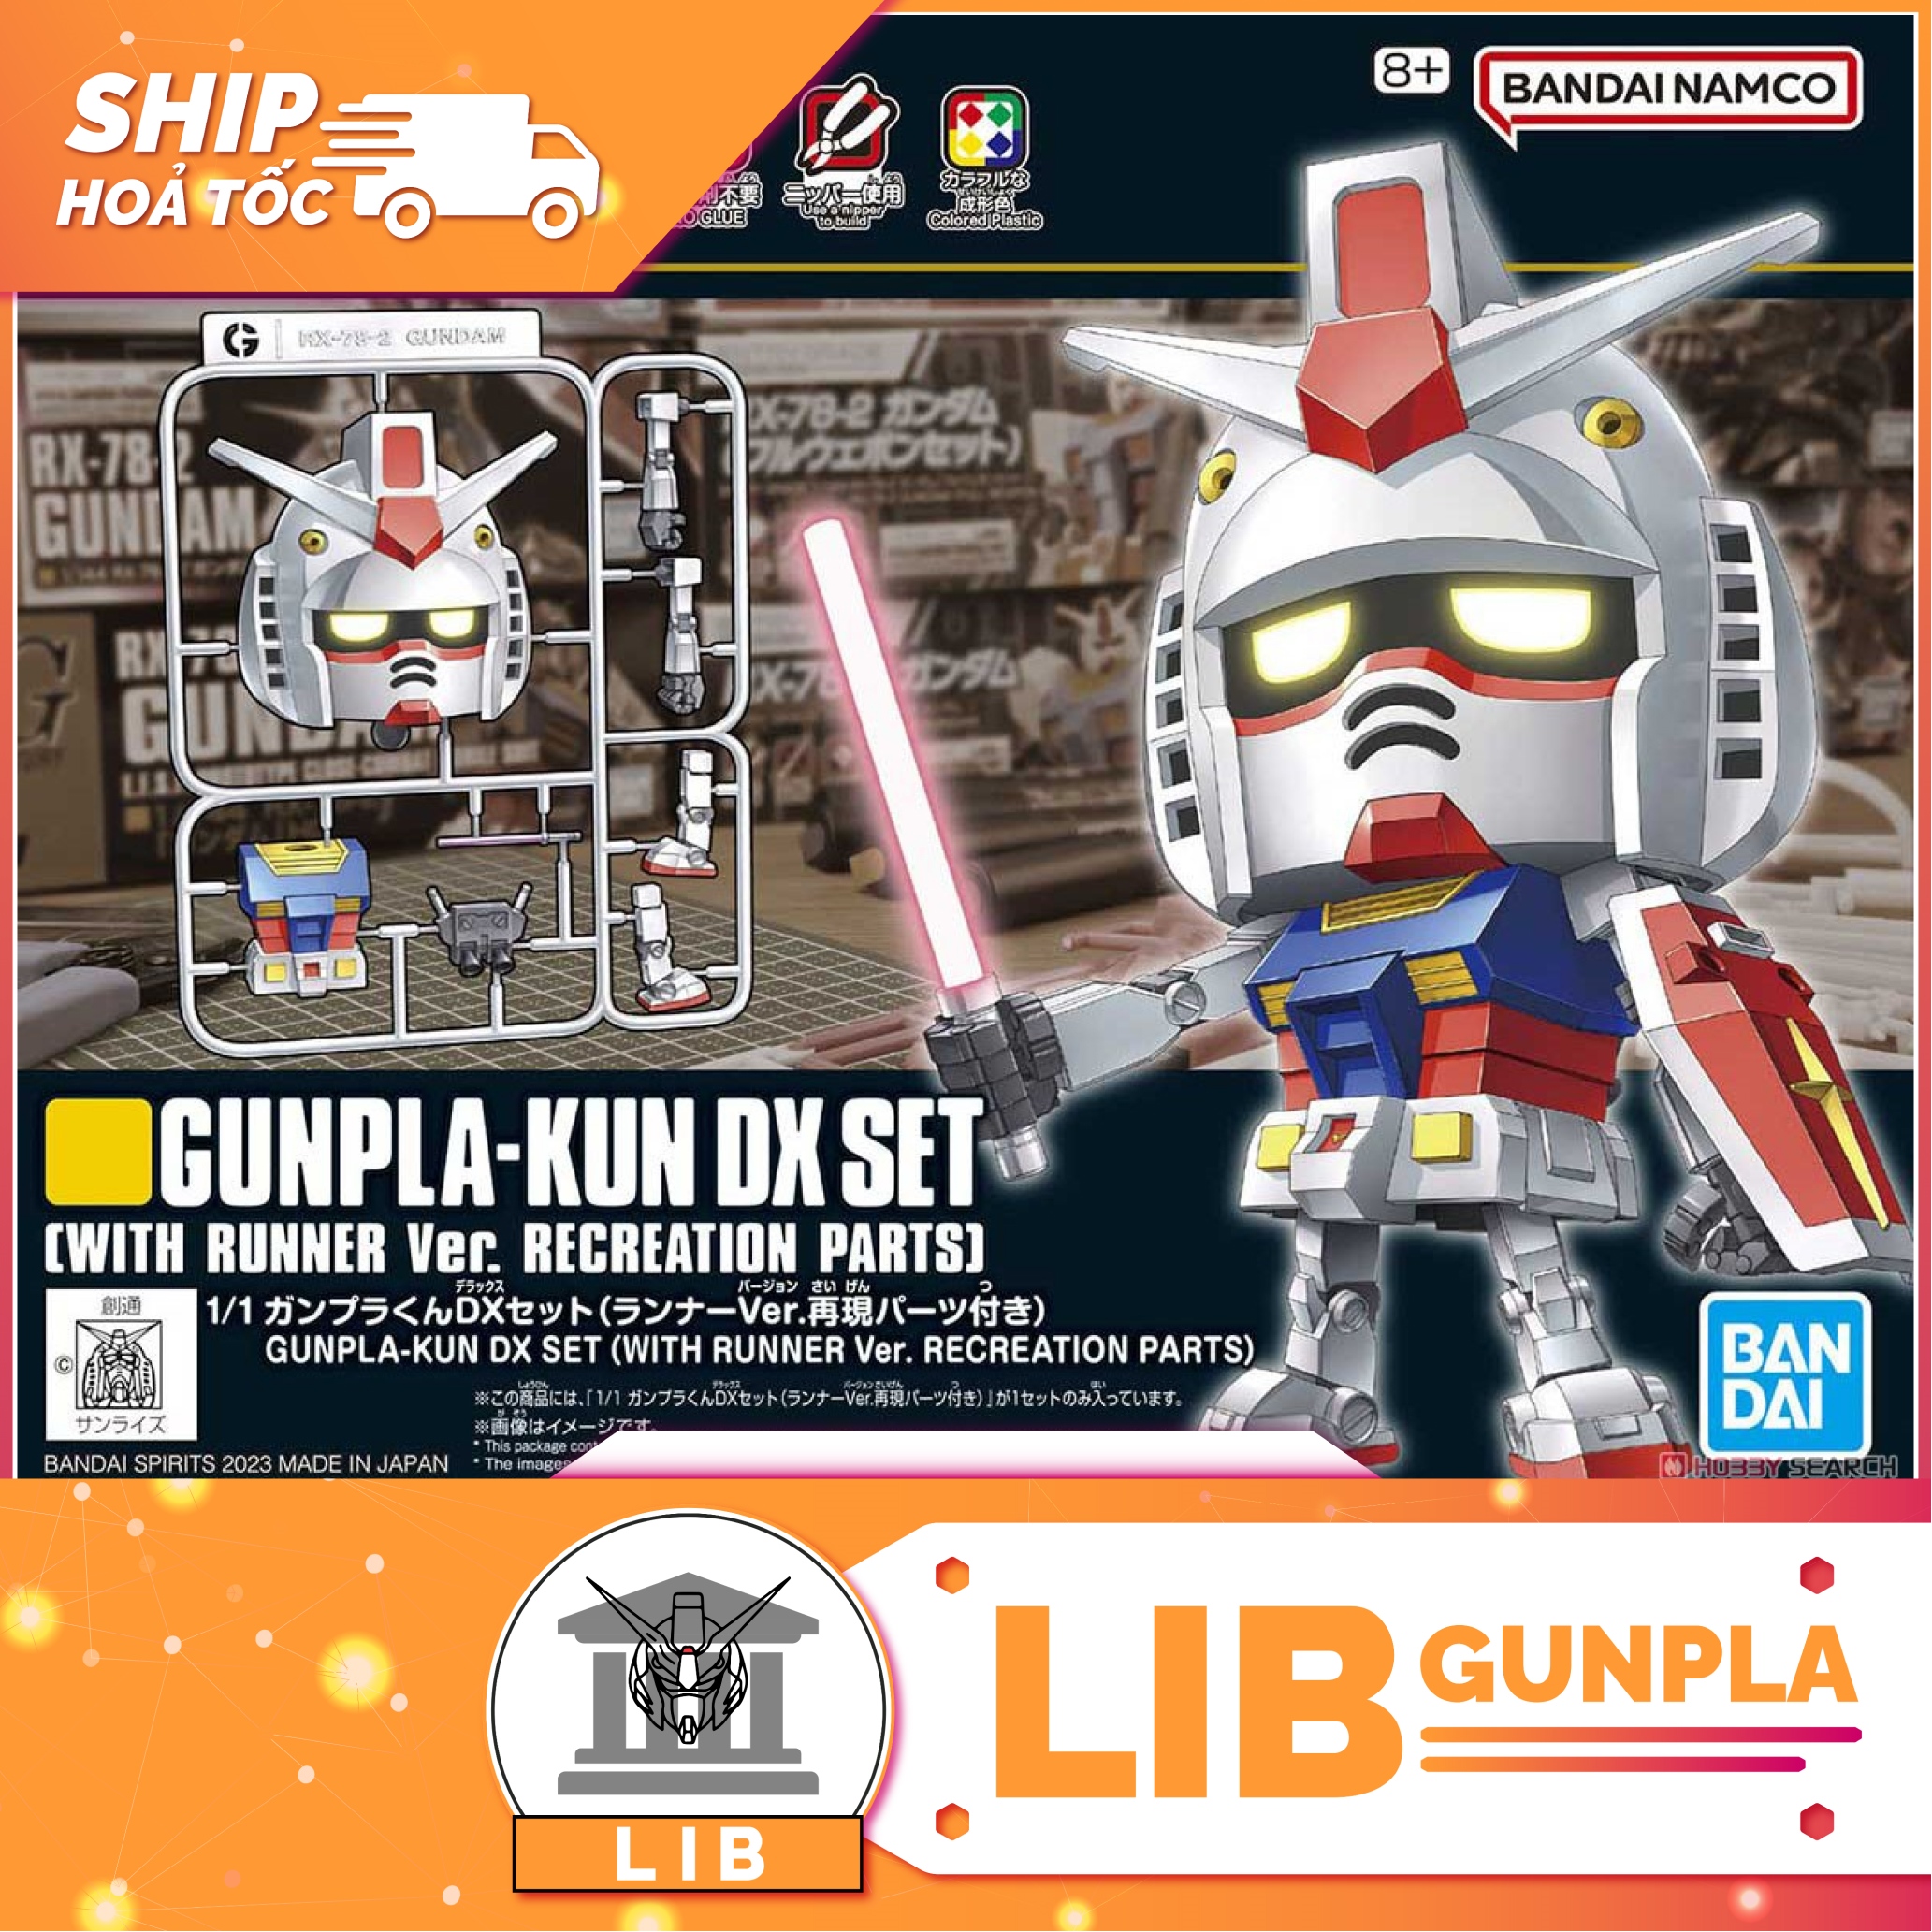 Thoughts on Gunpla-kun and limex? : r/Gunpla